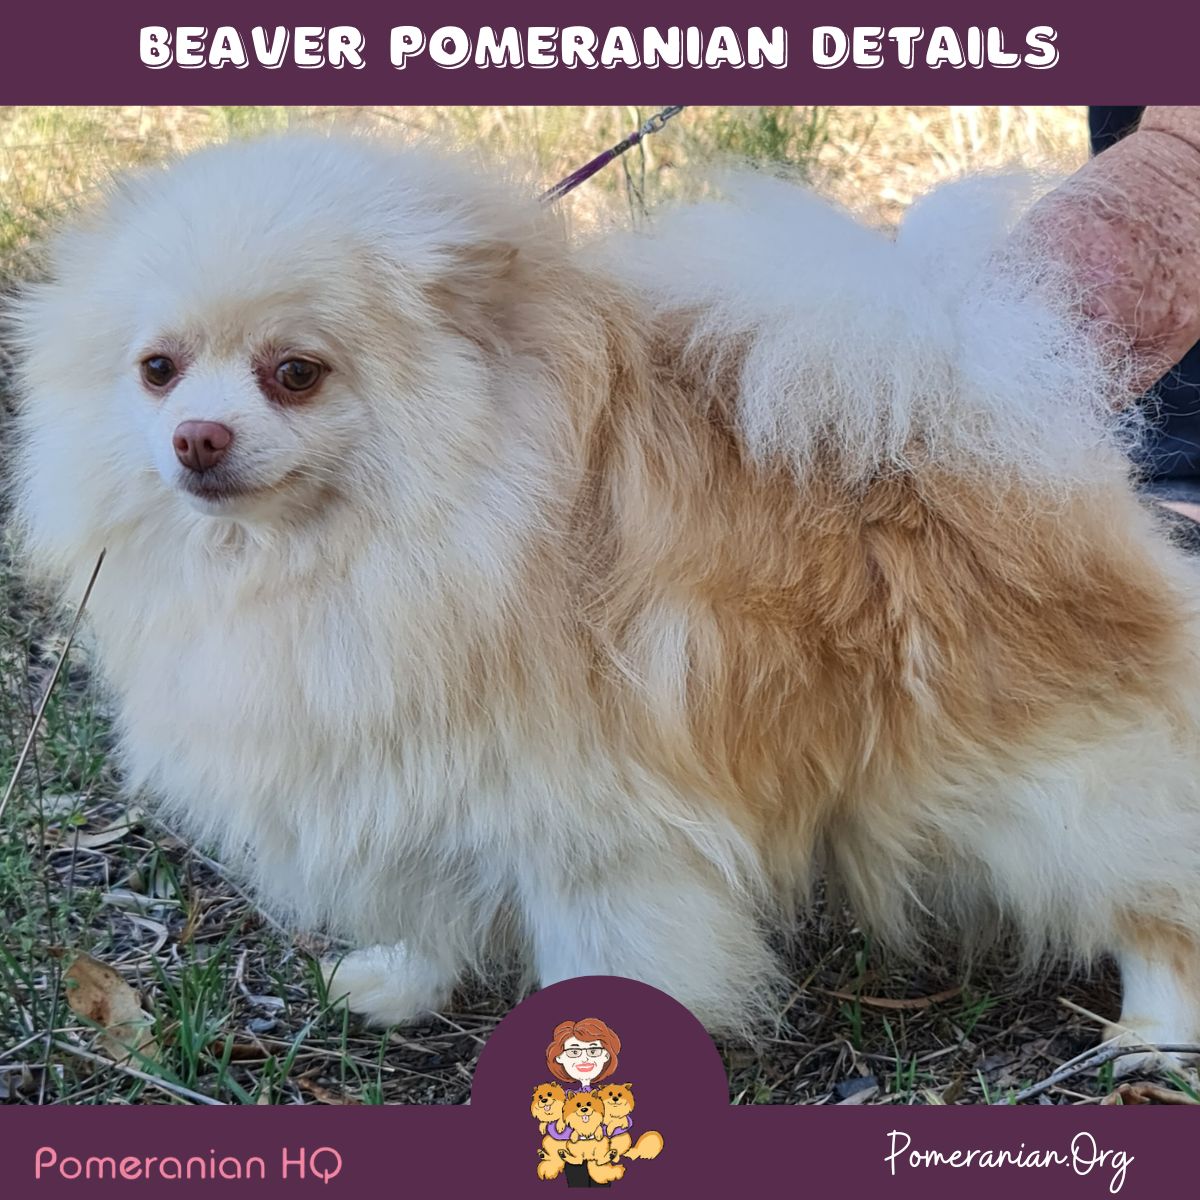 Beaver Pomeranian